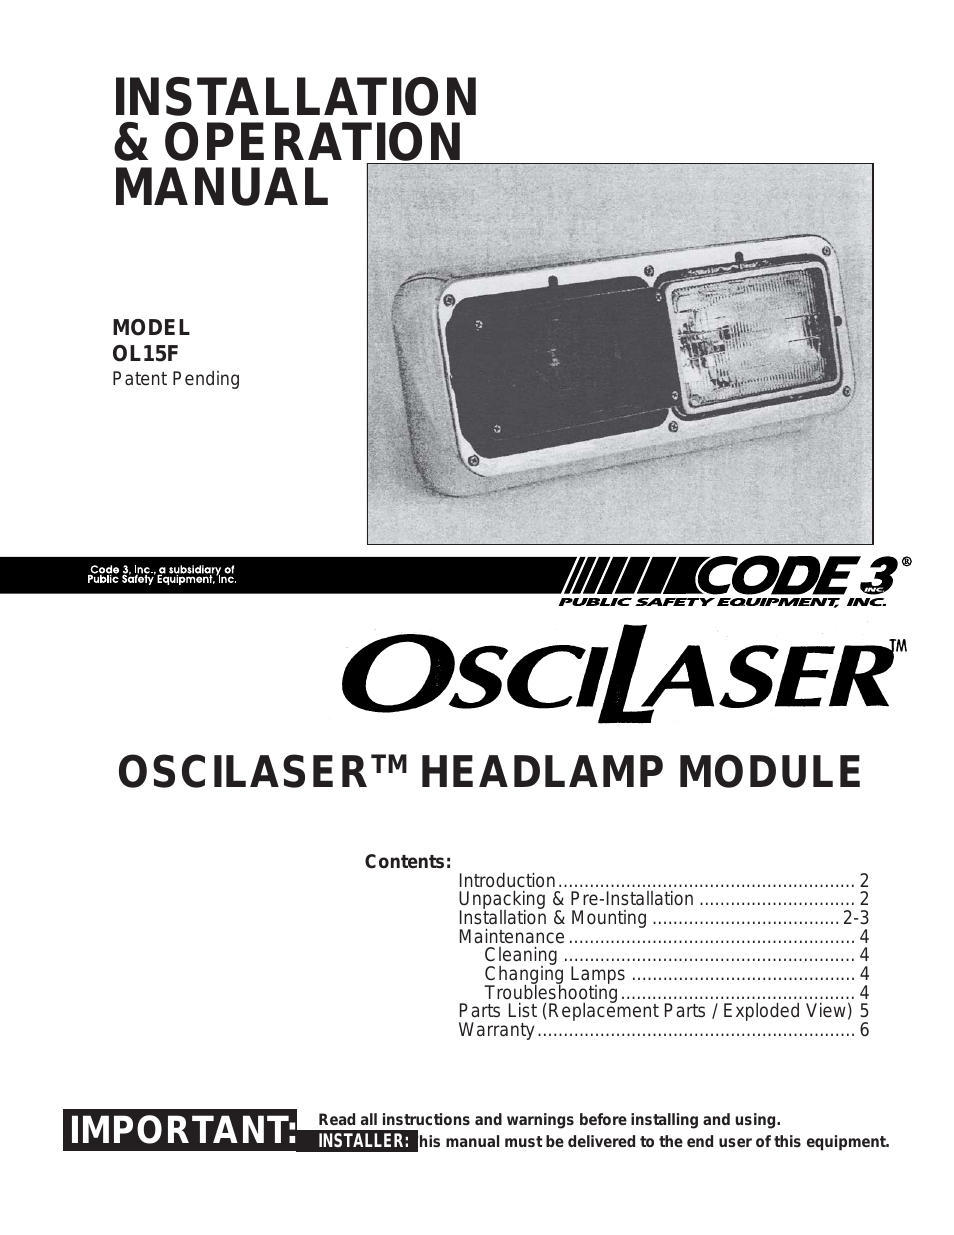 OsciLaser Headlamp